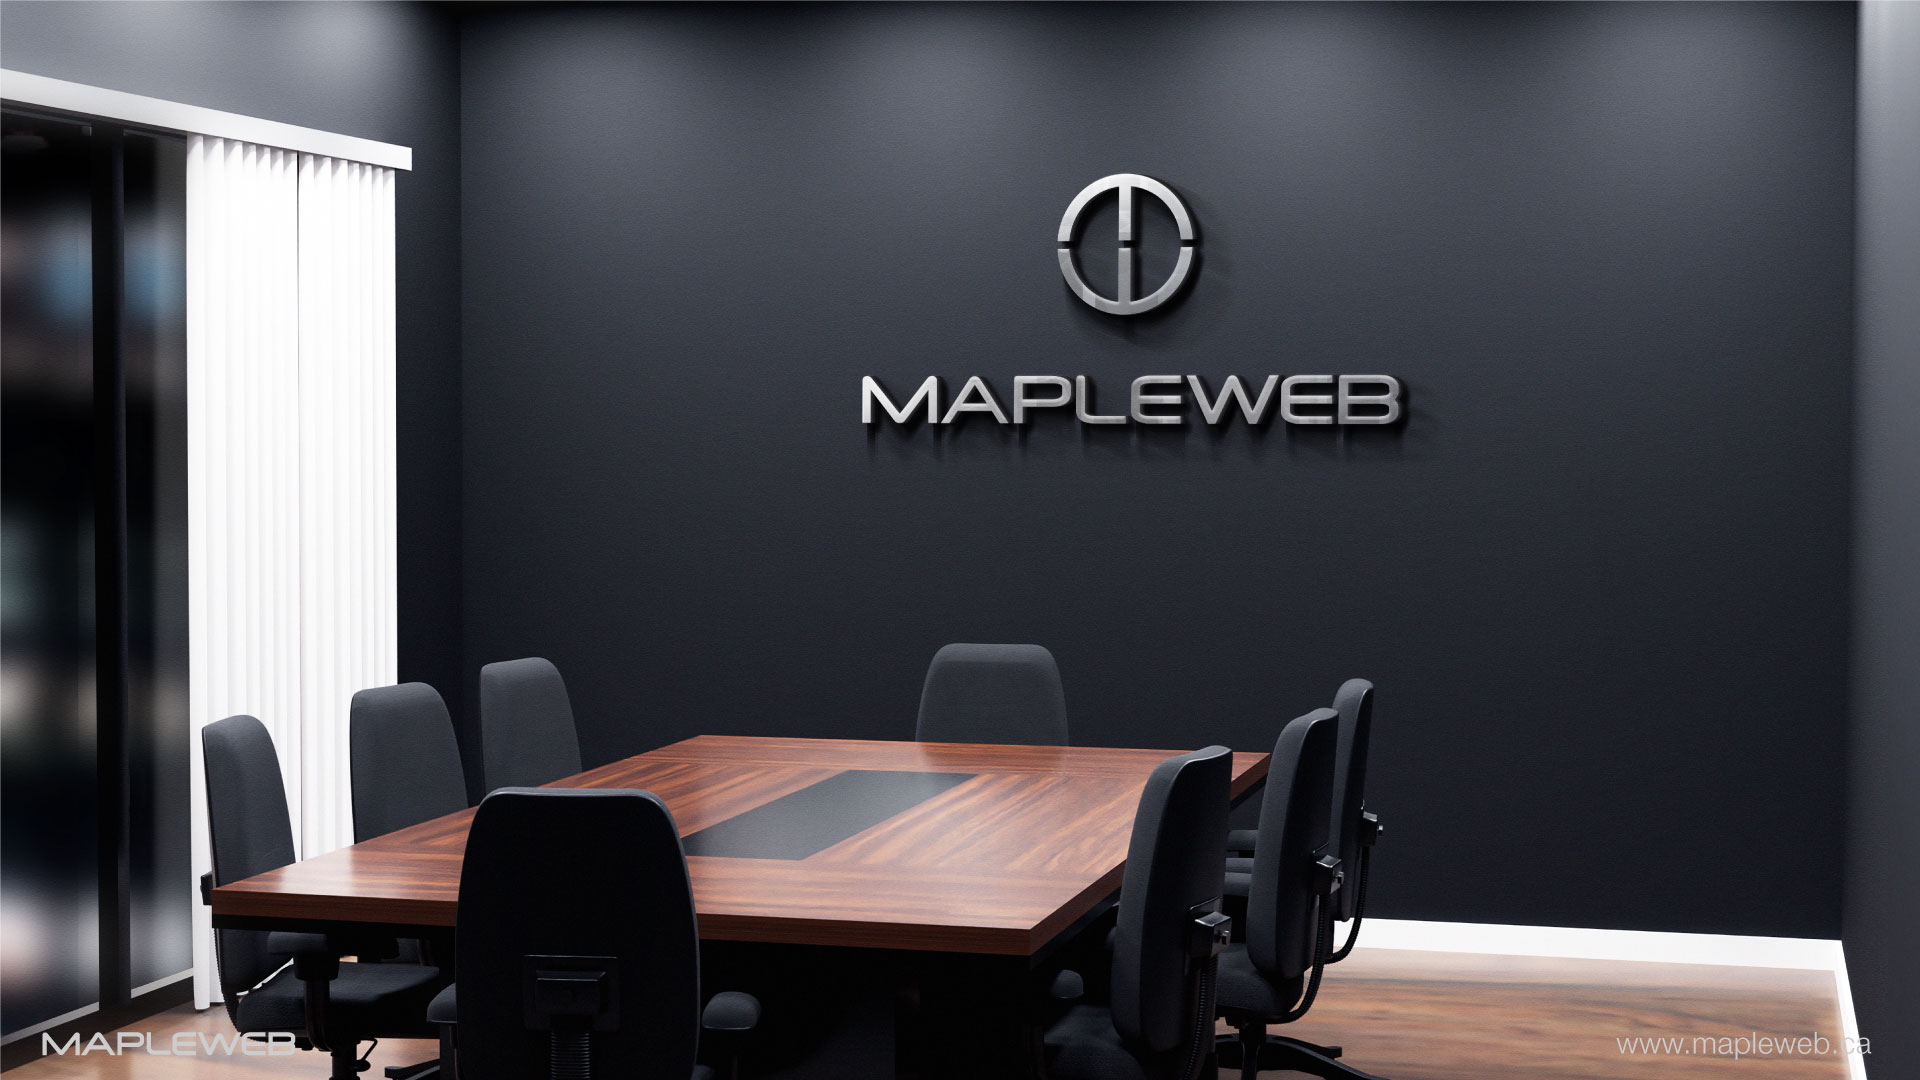 mapleweb-brand-logo-design-by-mapleweb-vancouver-canada-office-wall-mock